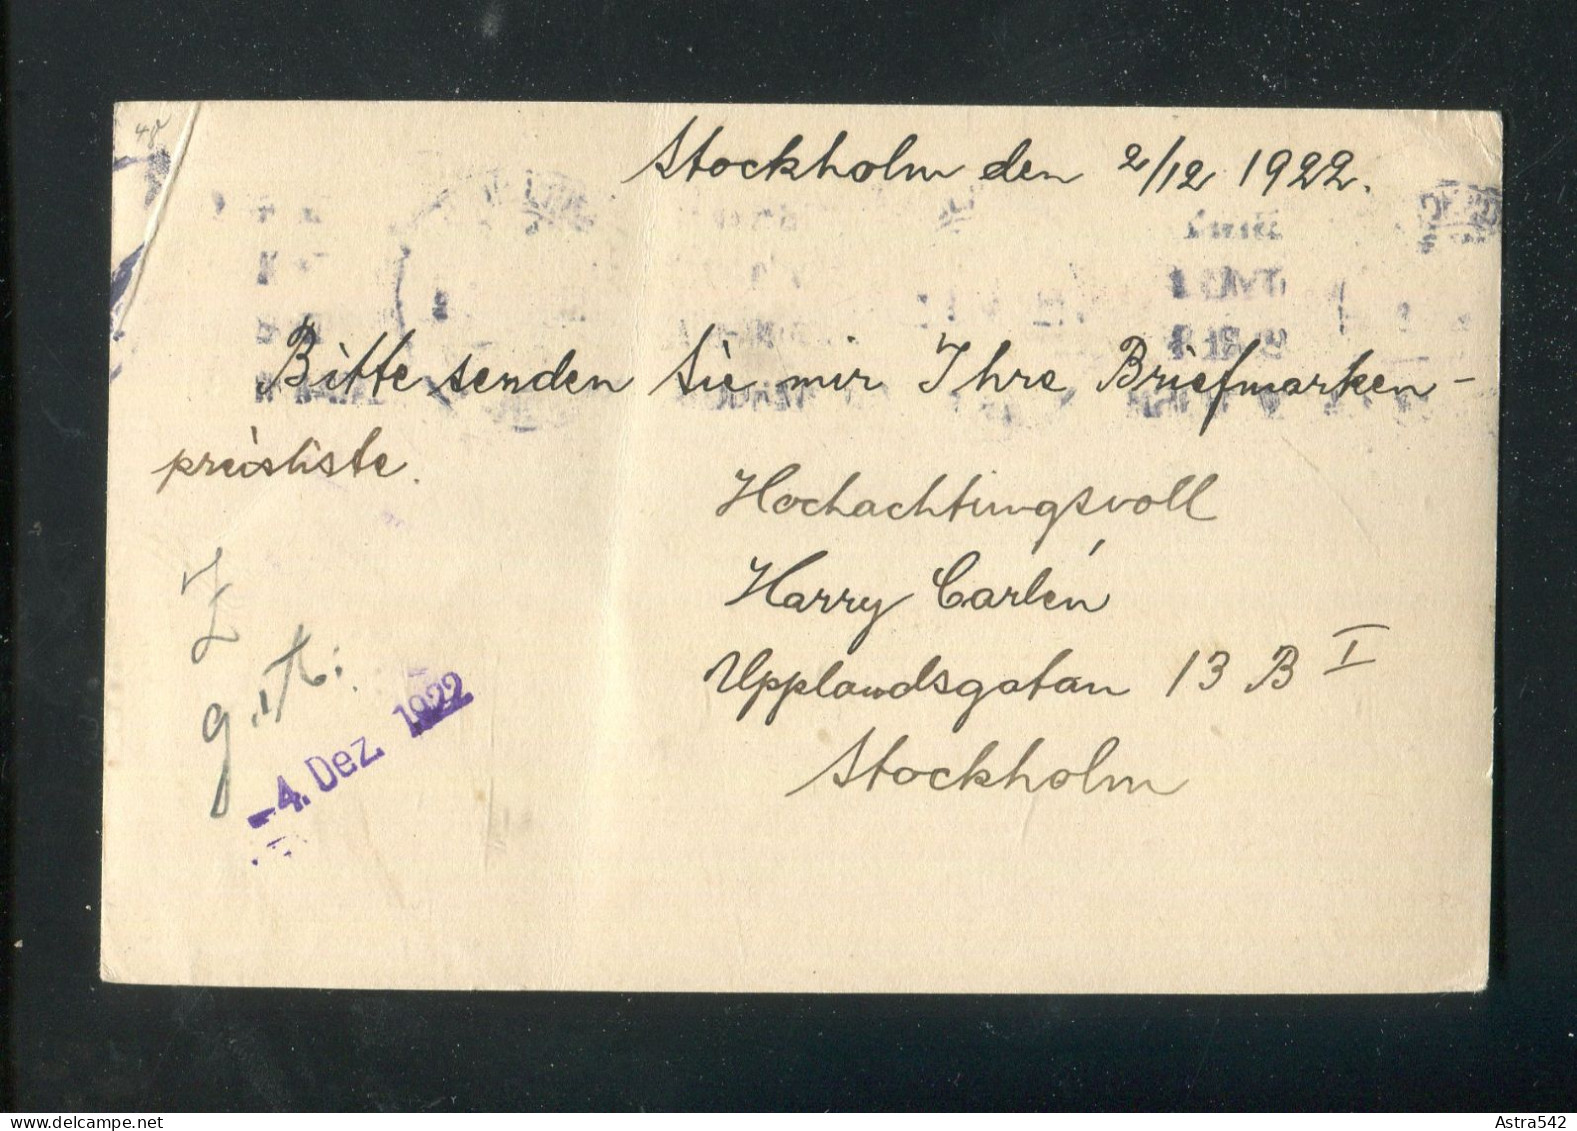 "SCHWEDEN" 1922, Postkarte Mi. P 47 Stempel "STOCKHOLM" Nach Berlin (A1132) - Interi Postali